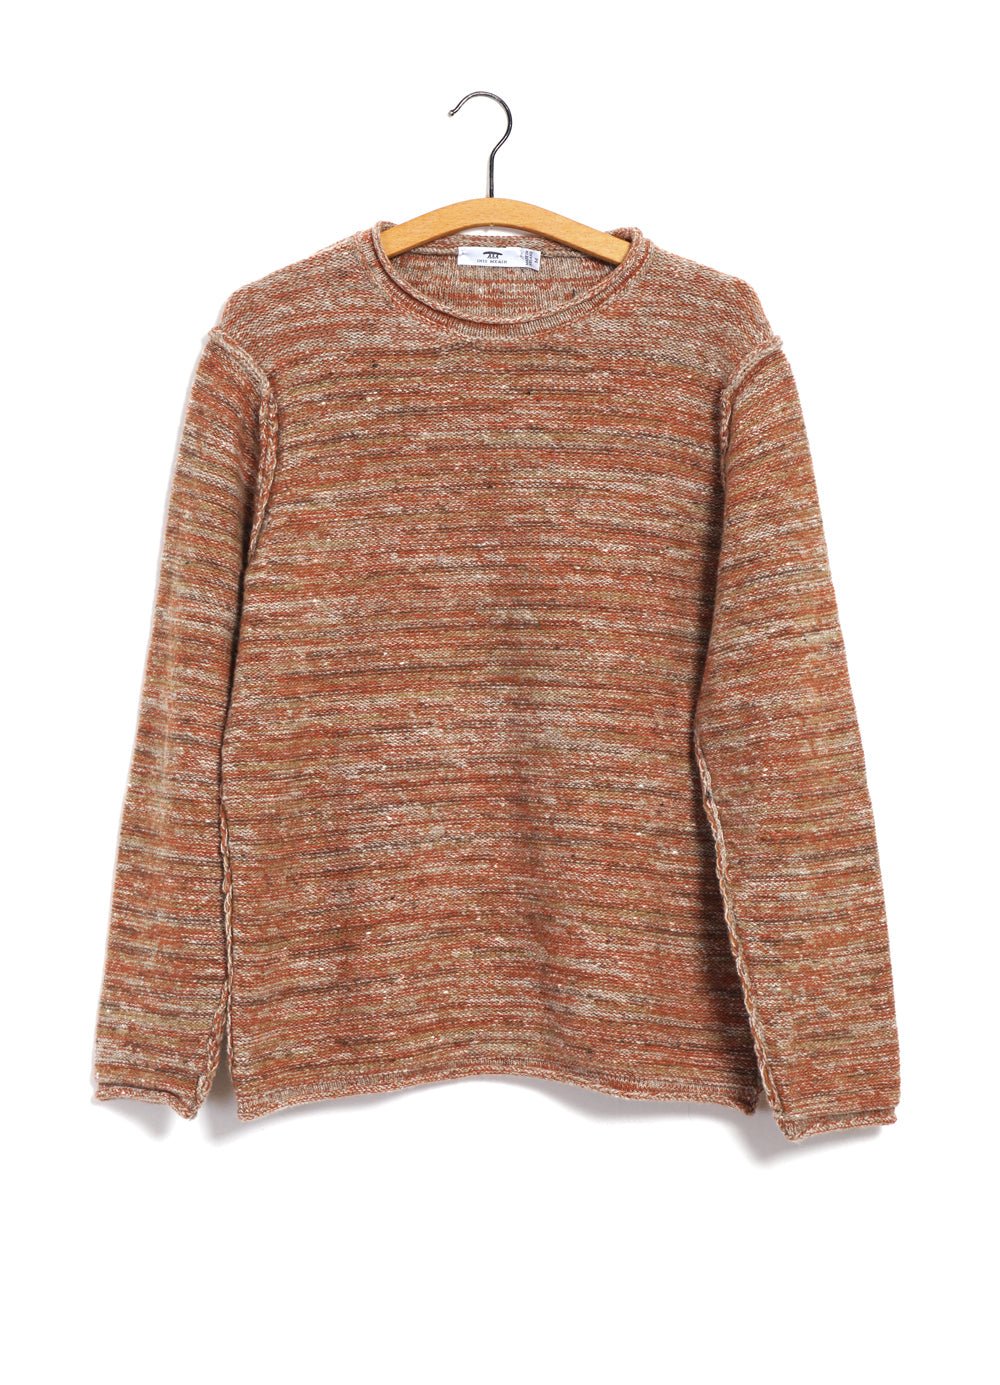 INIS MEÁIN - VARIED STRIPE | Merino & Cashmere Tunic Sweater | Clementine - HANSEN Garments